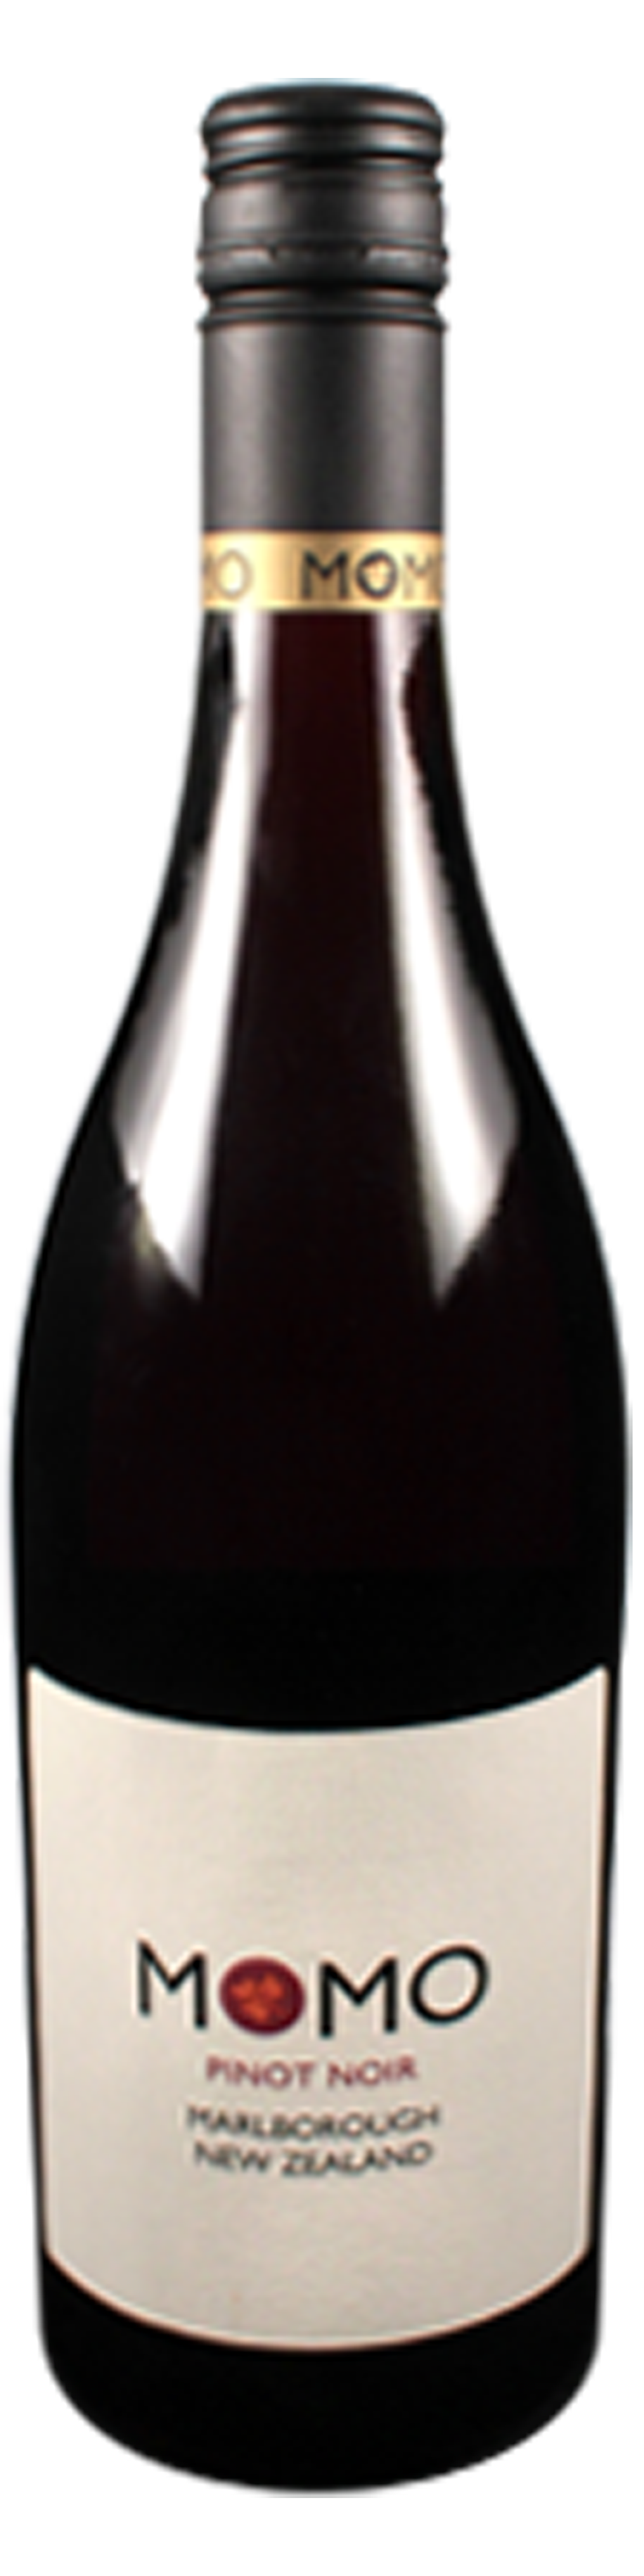 Bottle shot of 2009 Pinot Noir